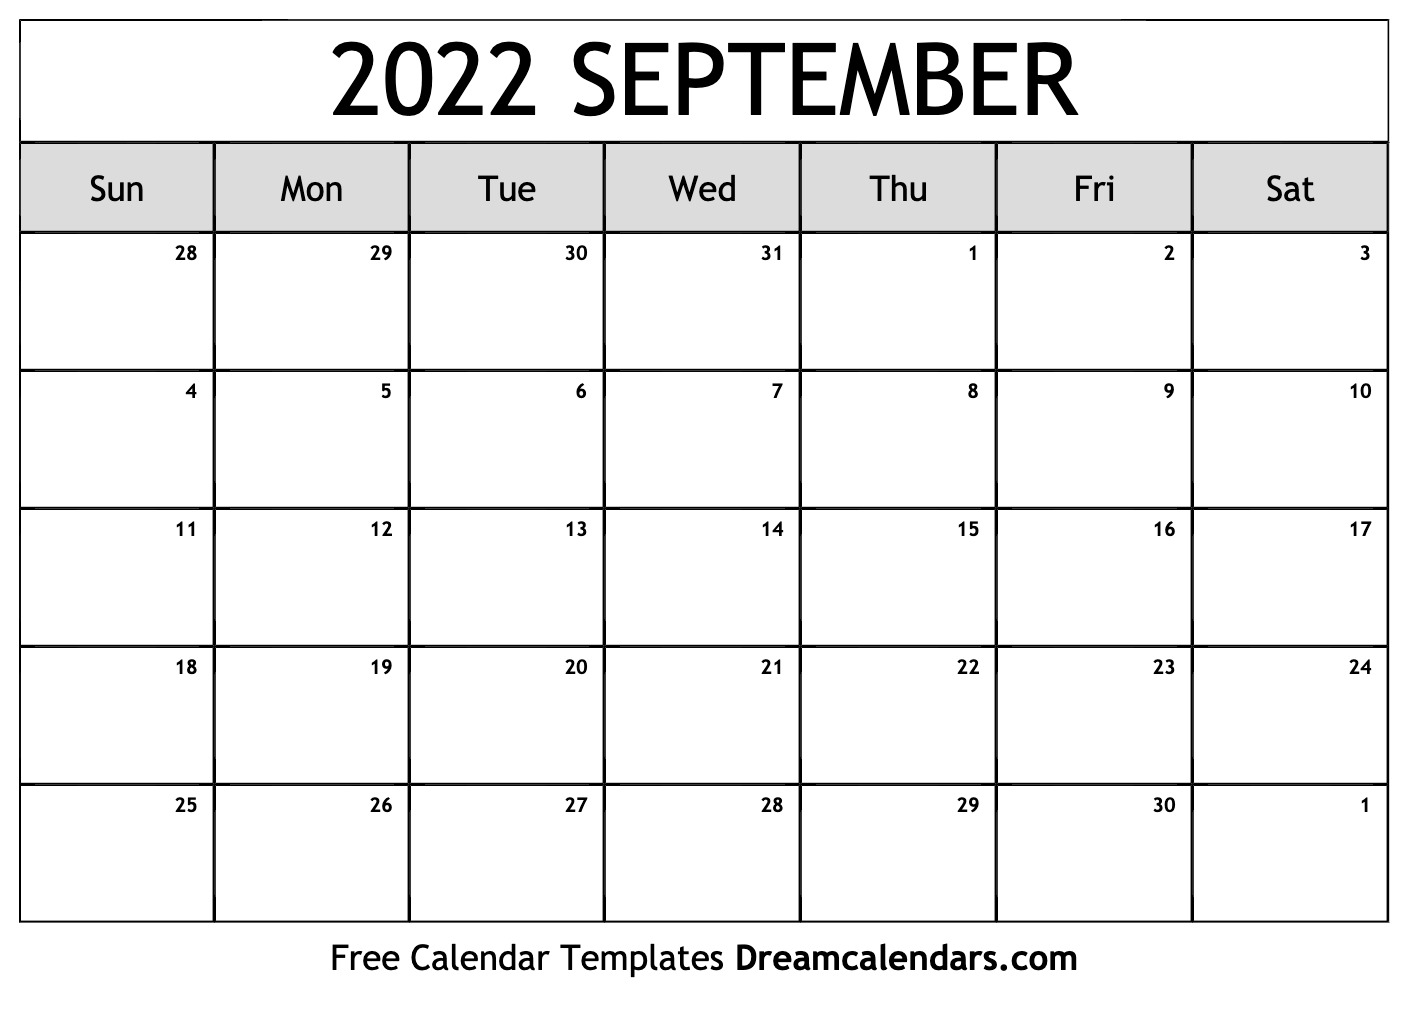 September 2022 Calendar Image Download Printable September 2022 Calendars